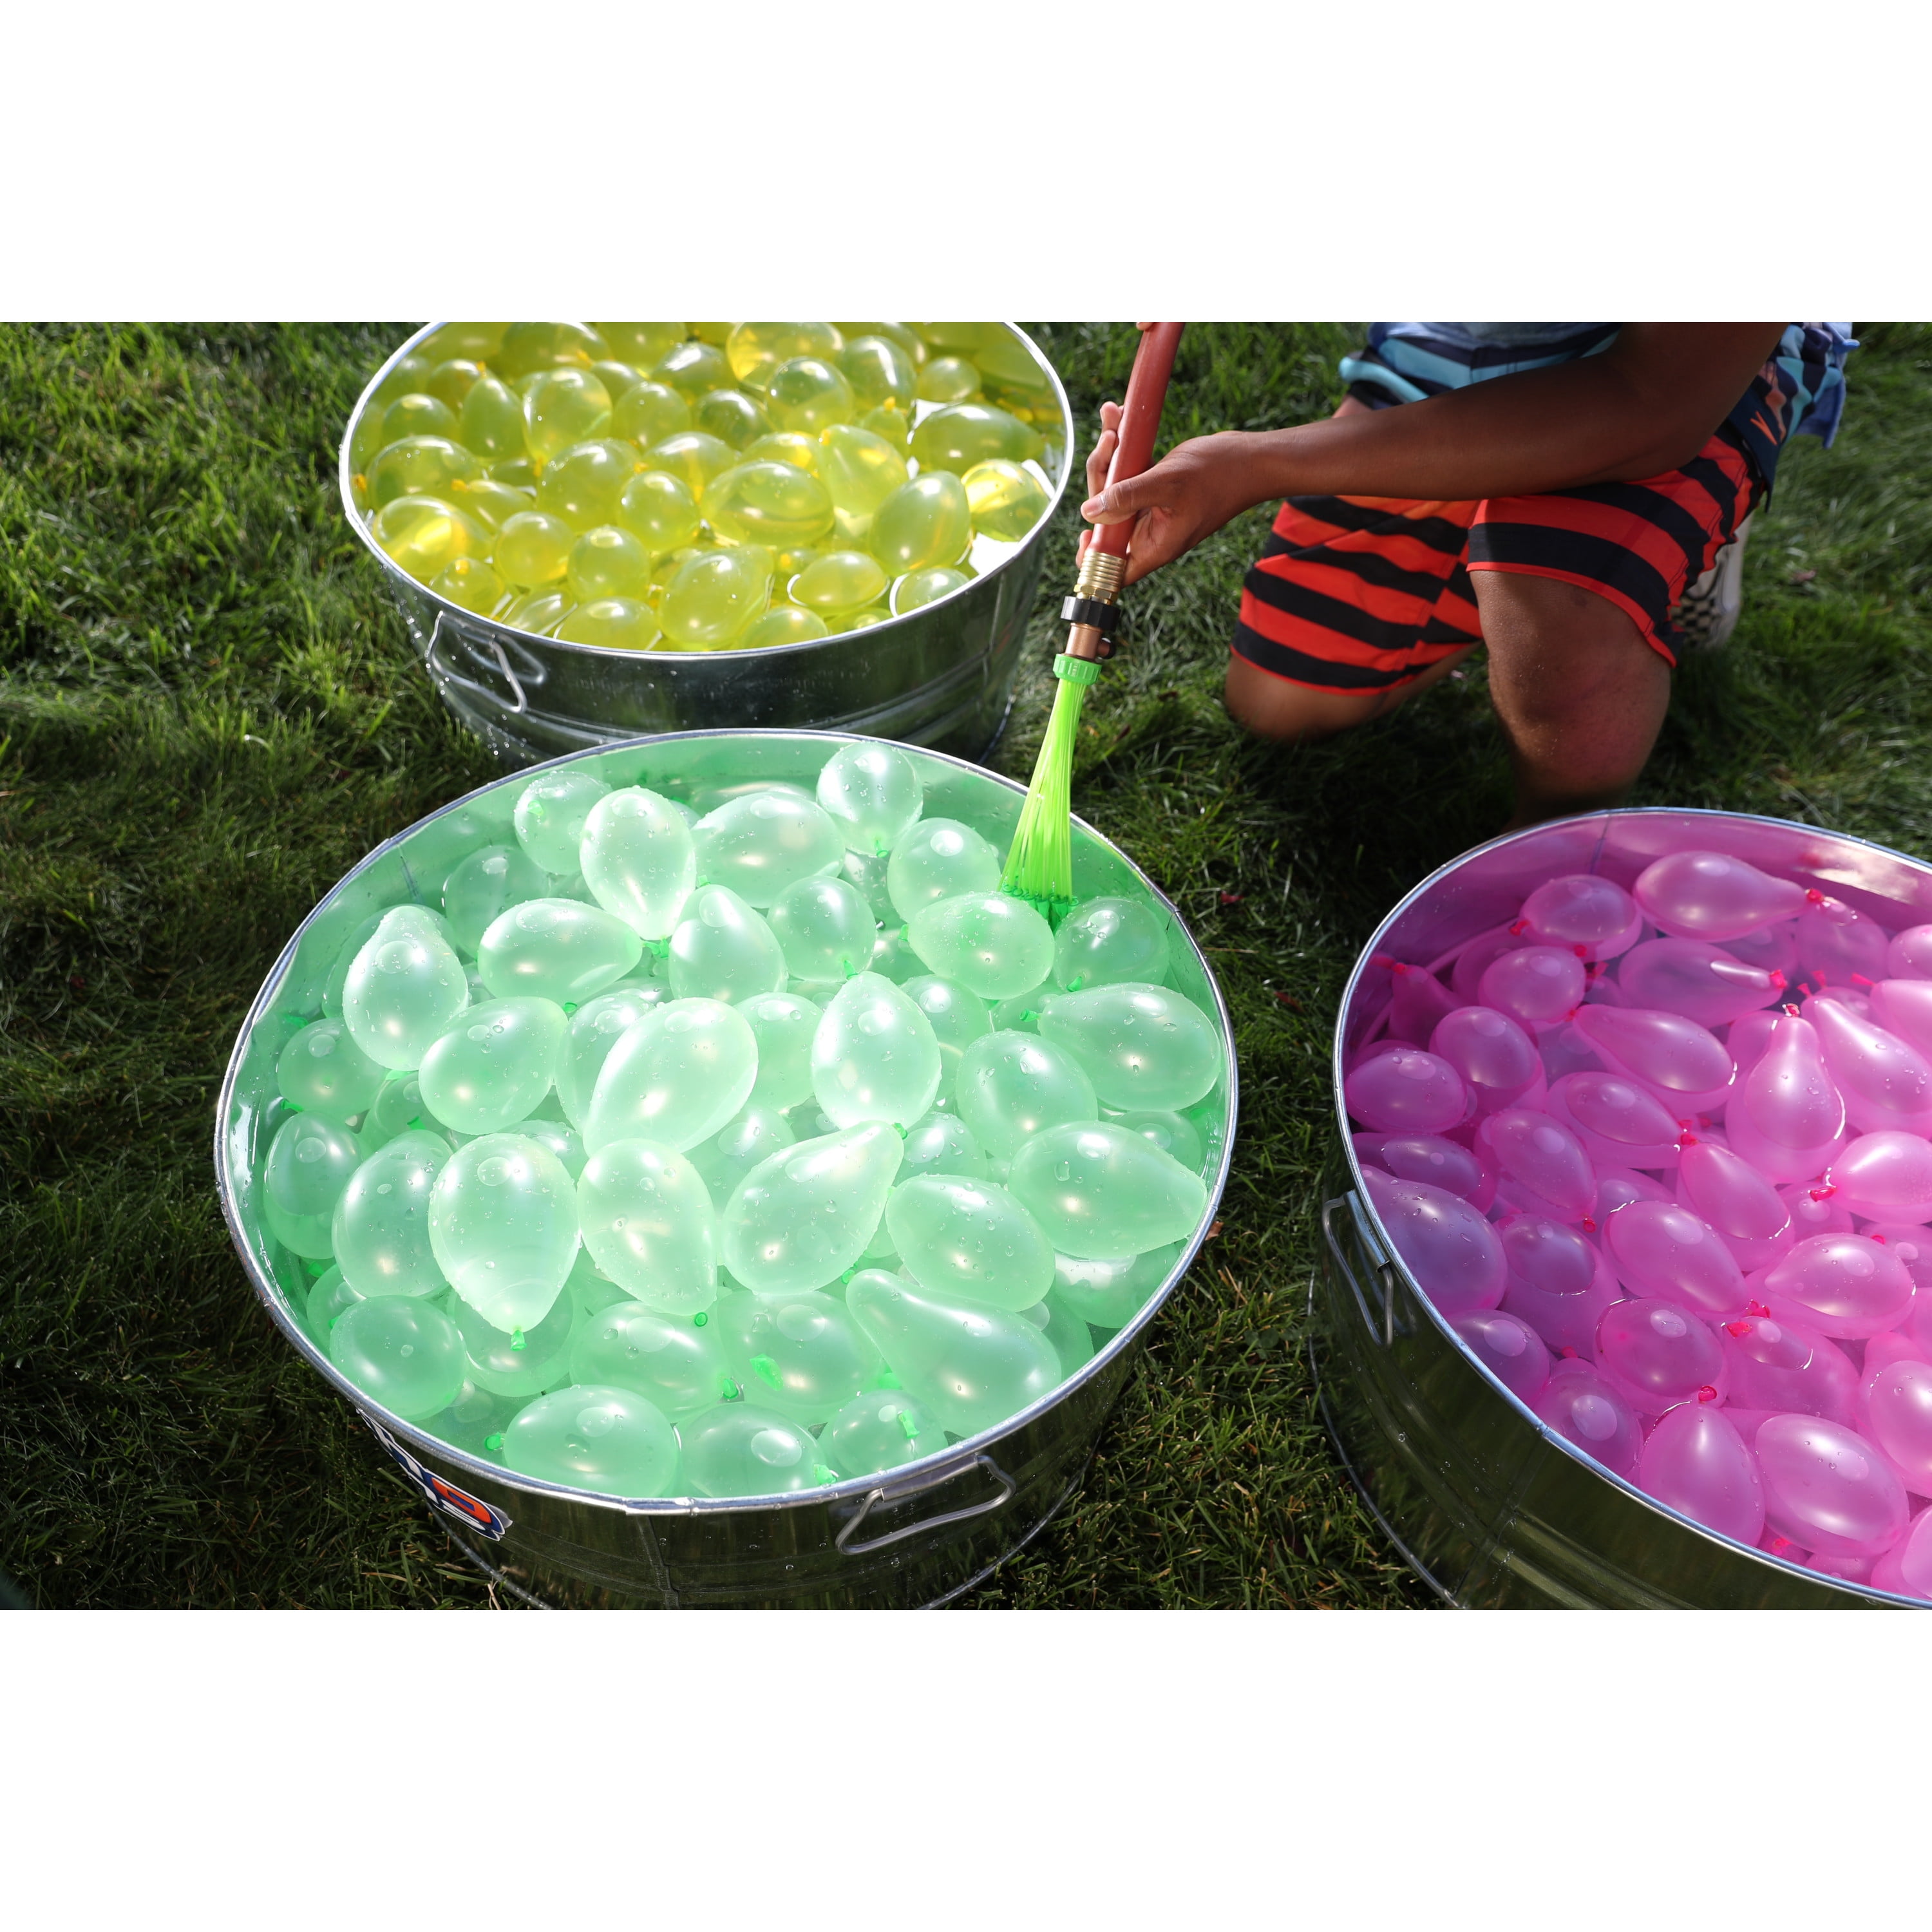 Bunch O Balloons: 100 Rapid-Filling, Self-Sealing Water Grenades 